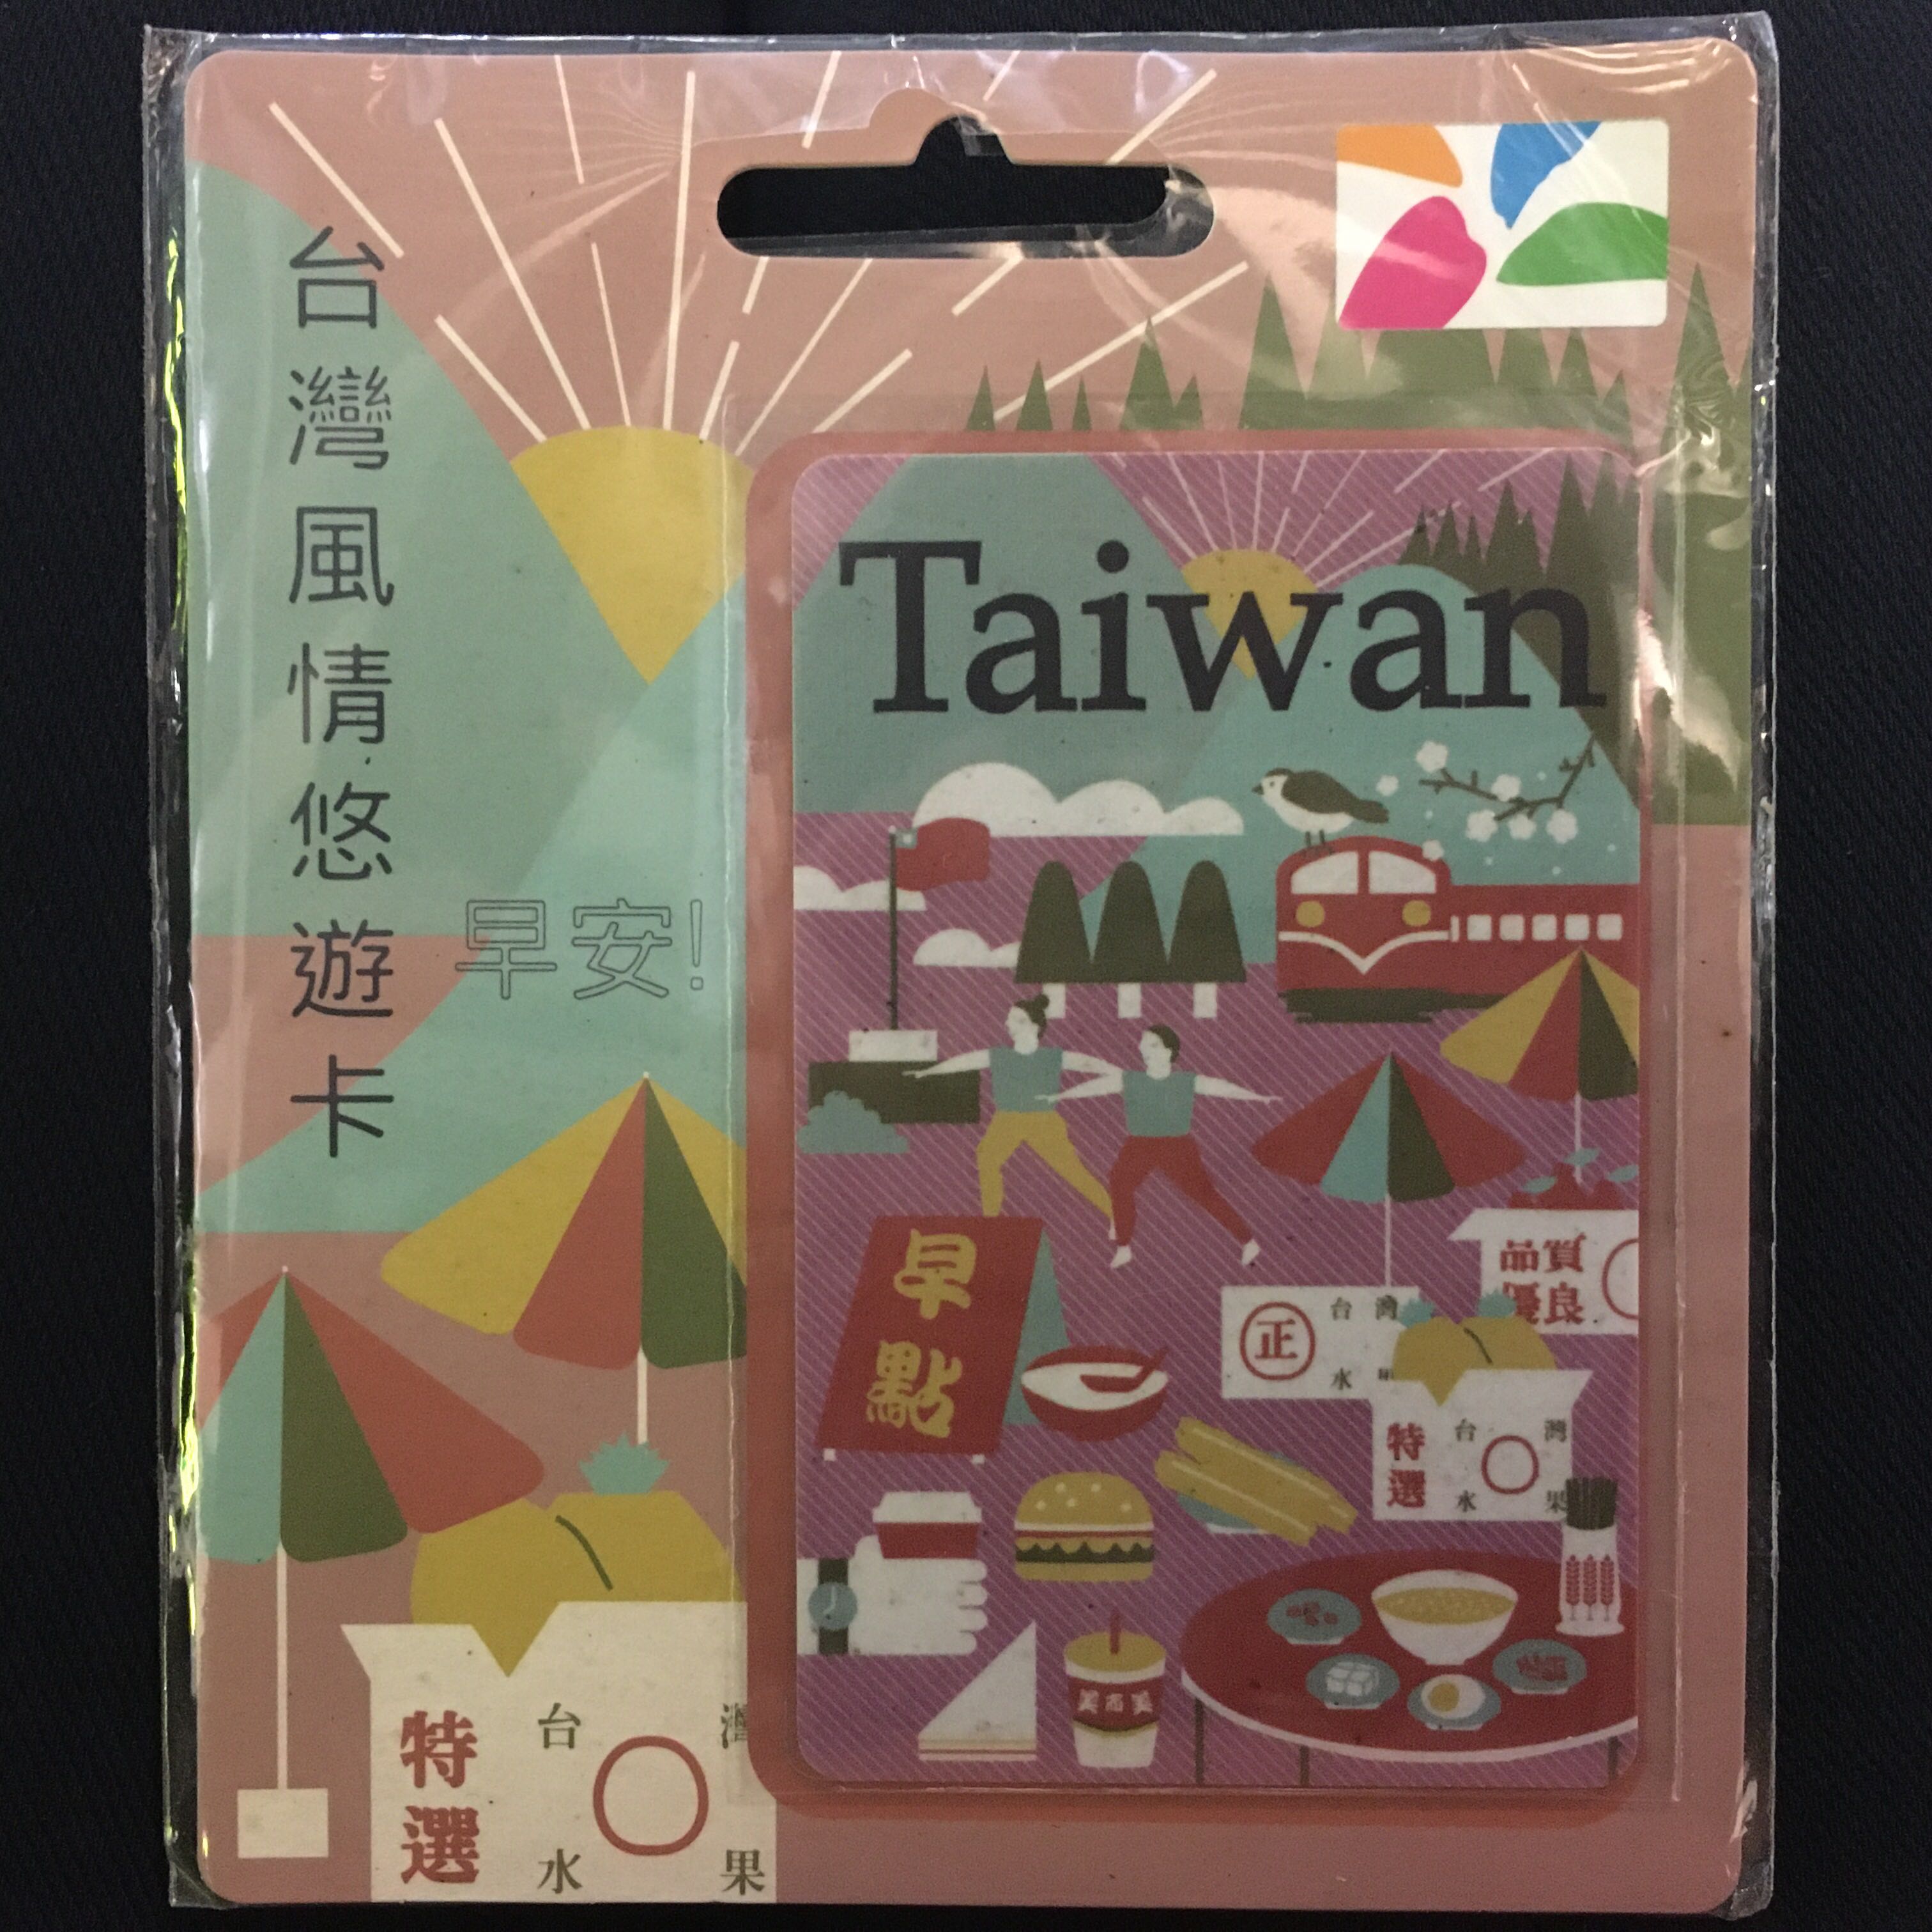 taiwan easycard tourist